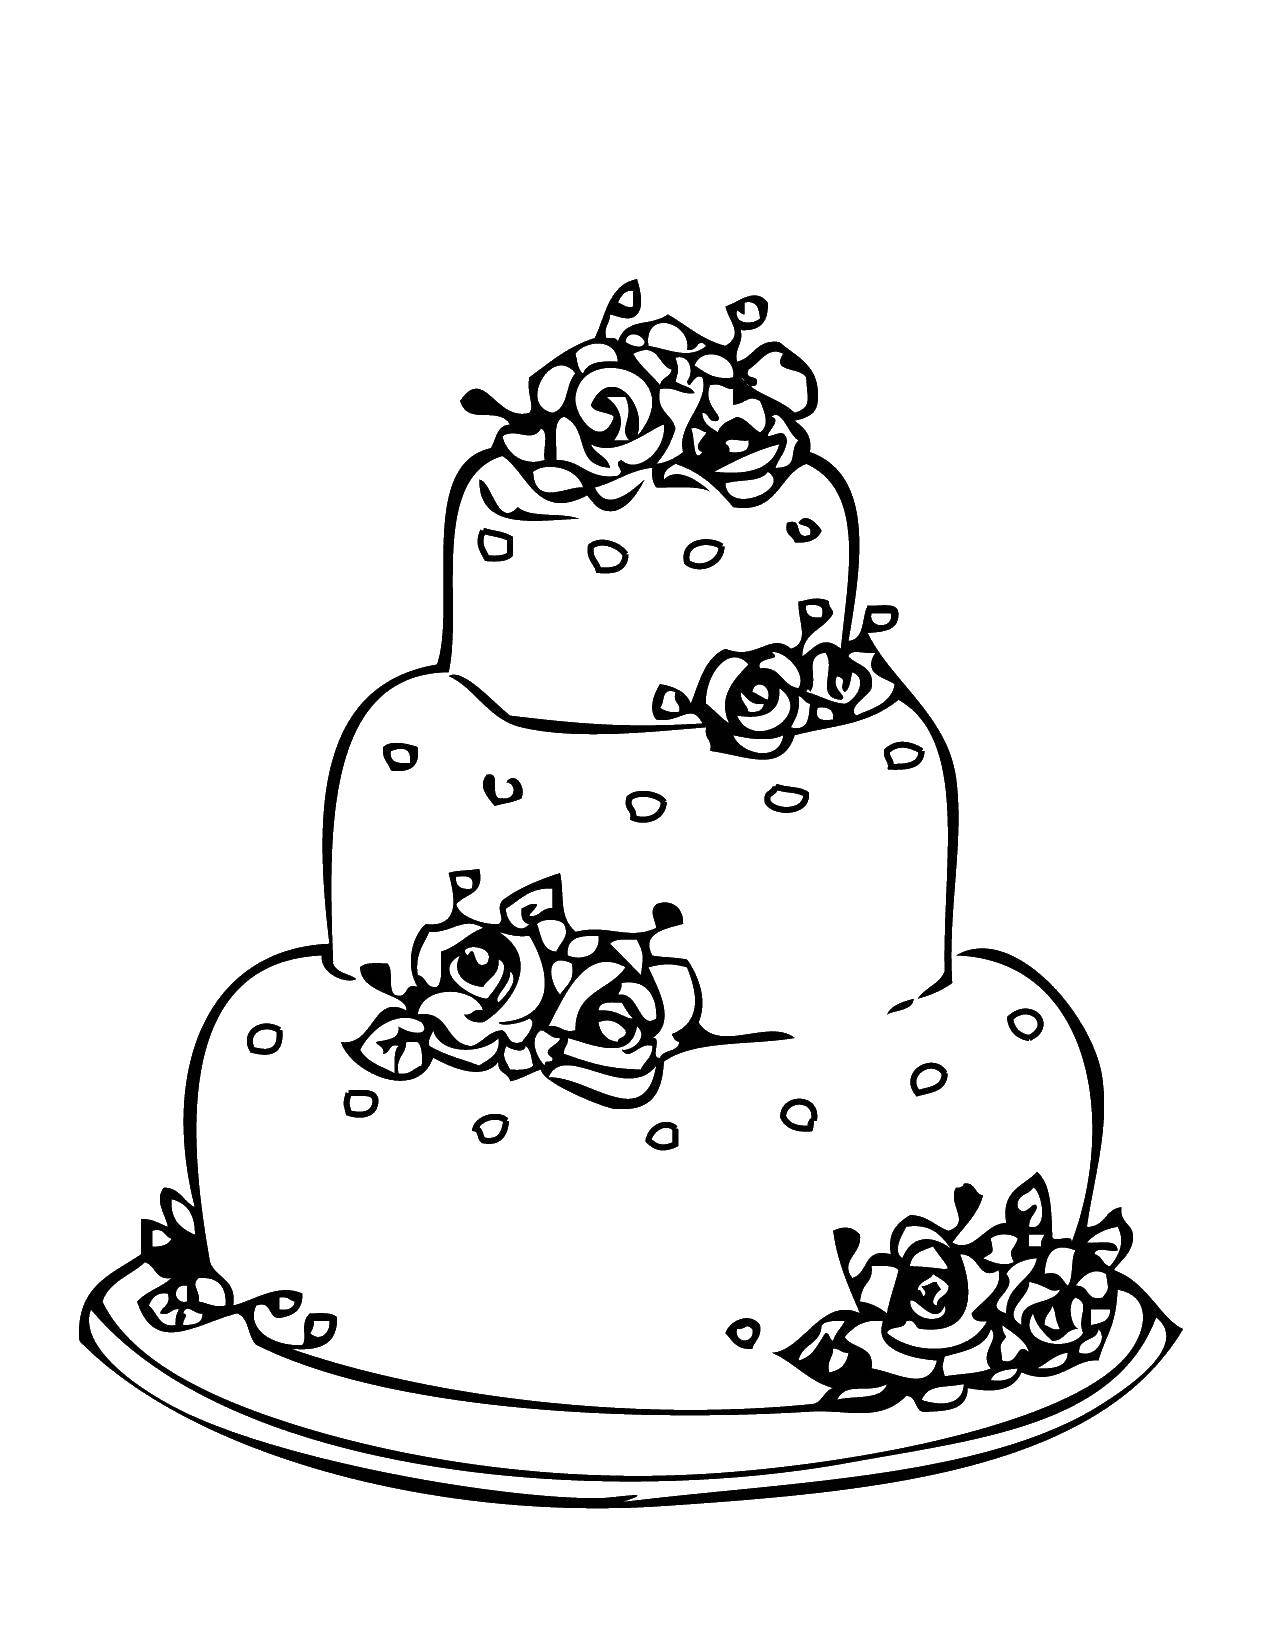 Coloring Cake. Category Wedding. Tags:  wedding, cake, congratulation.